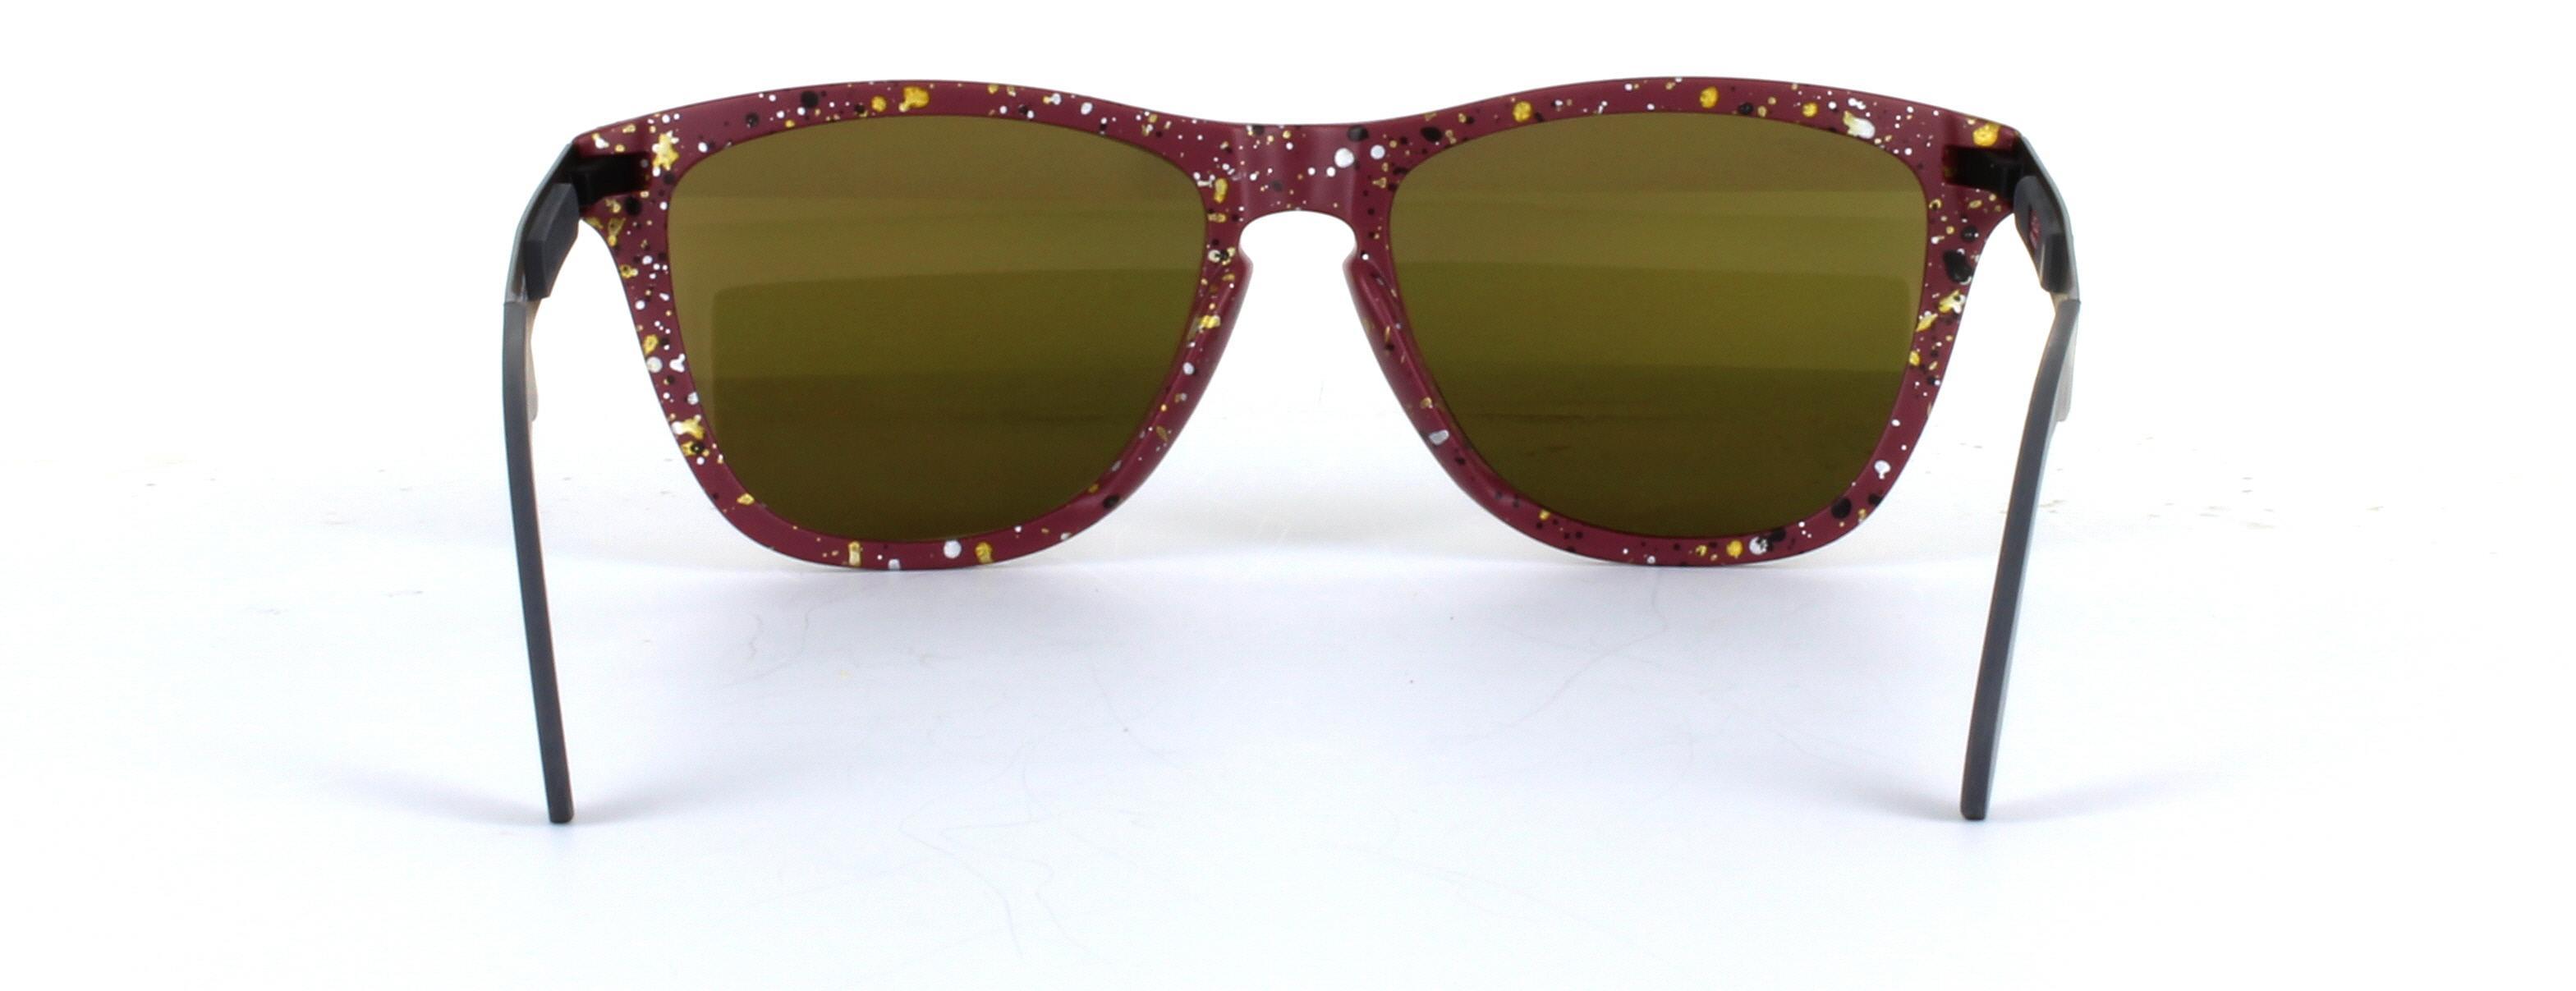 Oakley (O9428) Red Full Rim Rectangular Plastic Sunglasses - Image View 3